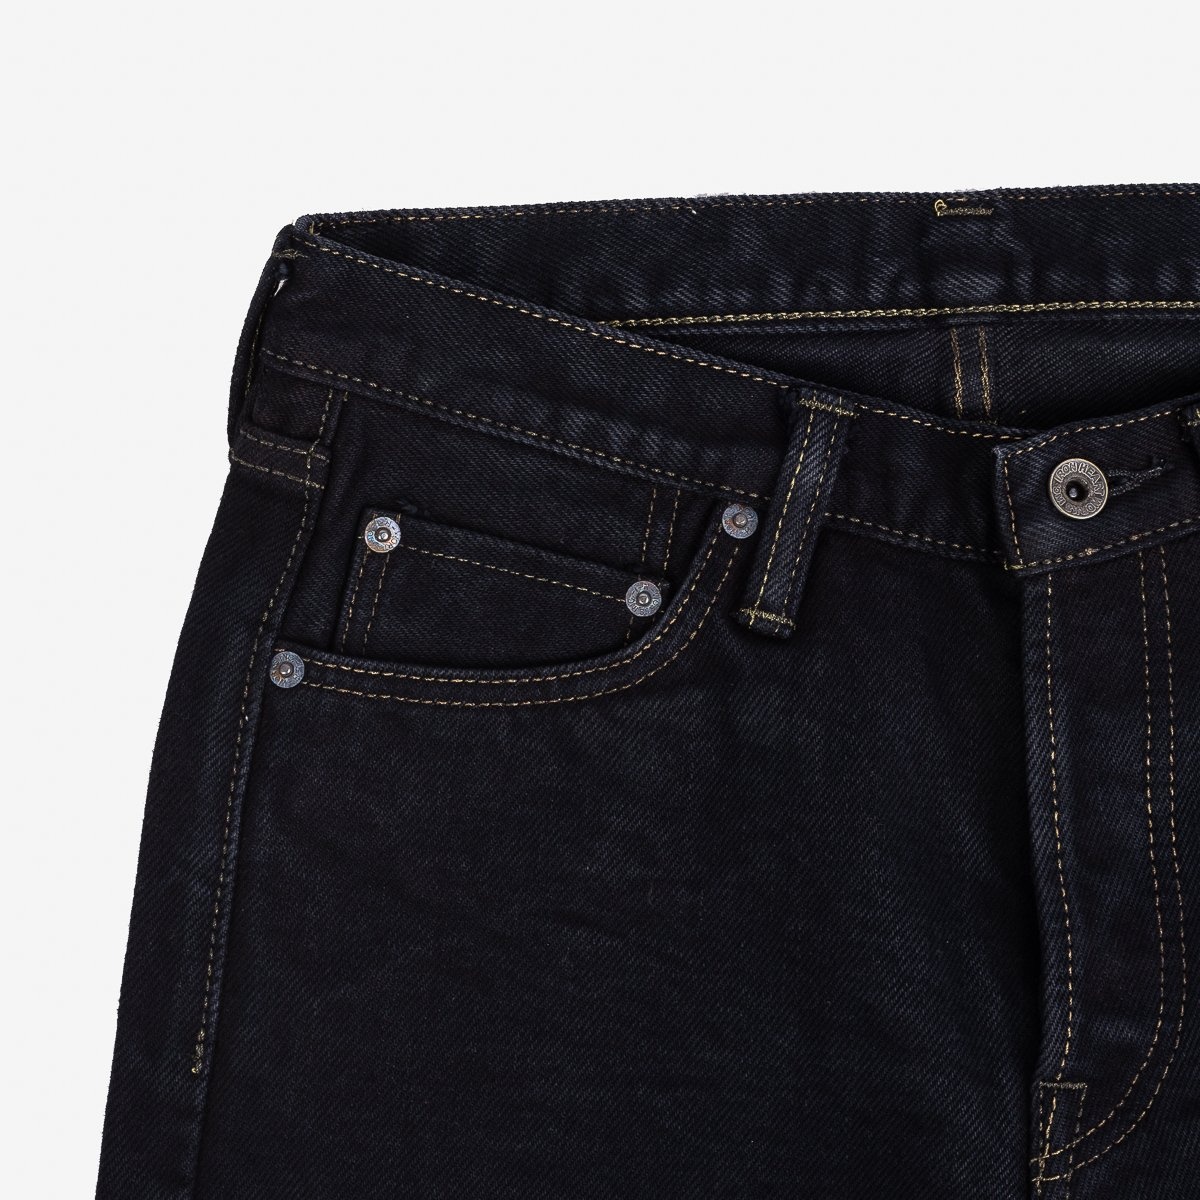 IH-666S-21od 21oz Selvedge Denim Slim Straight Cut Jeans - Indigo Overdyed Black - 6